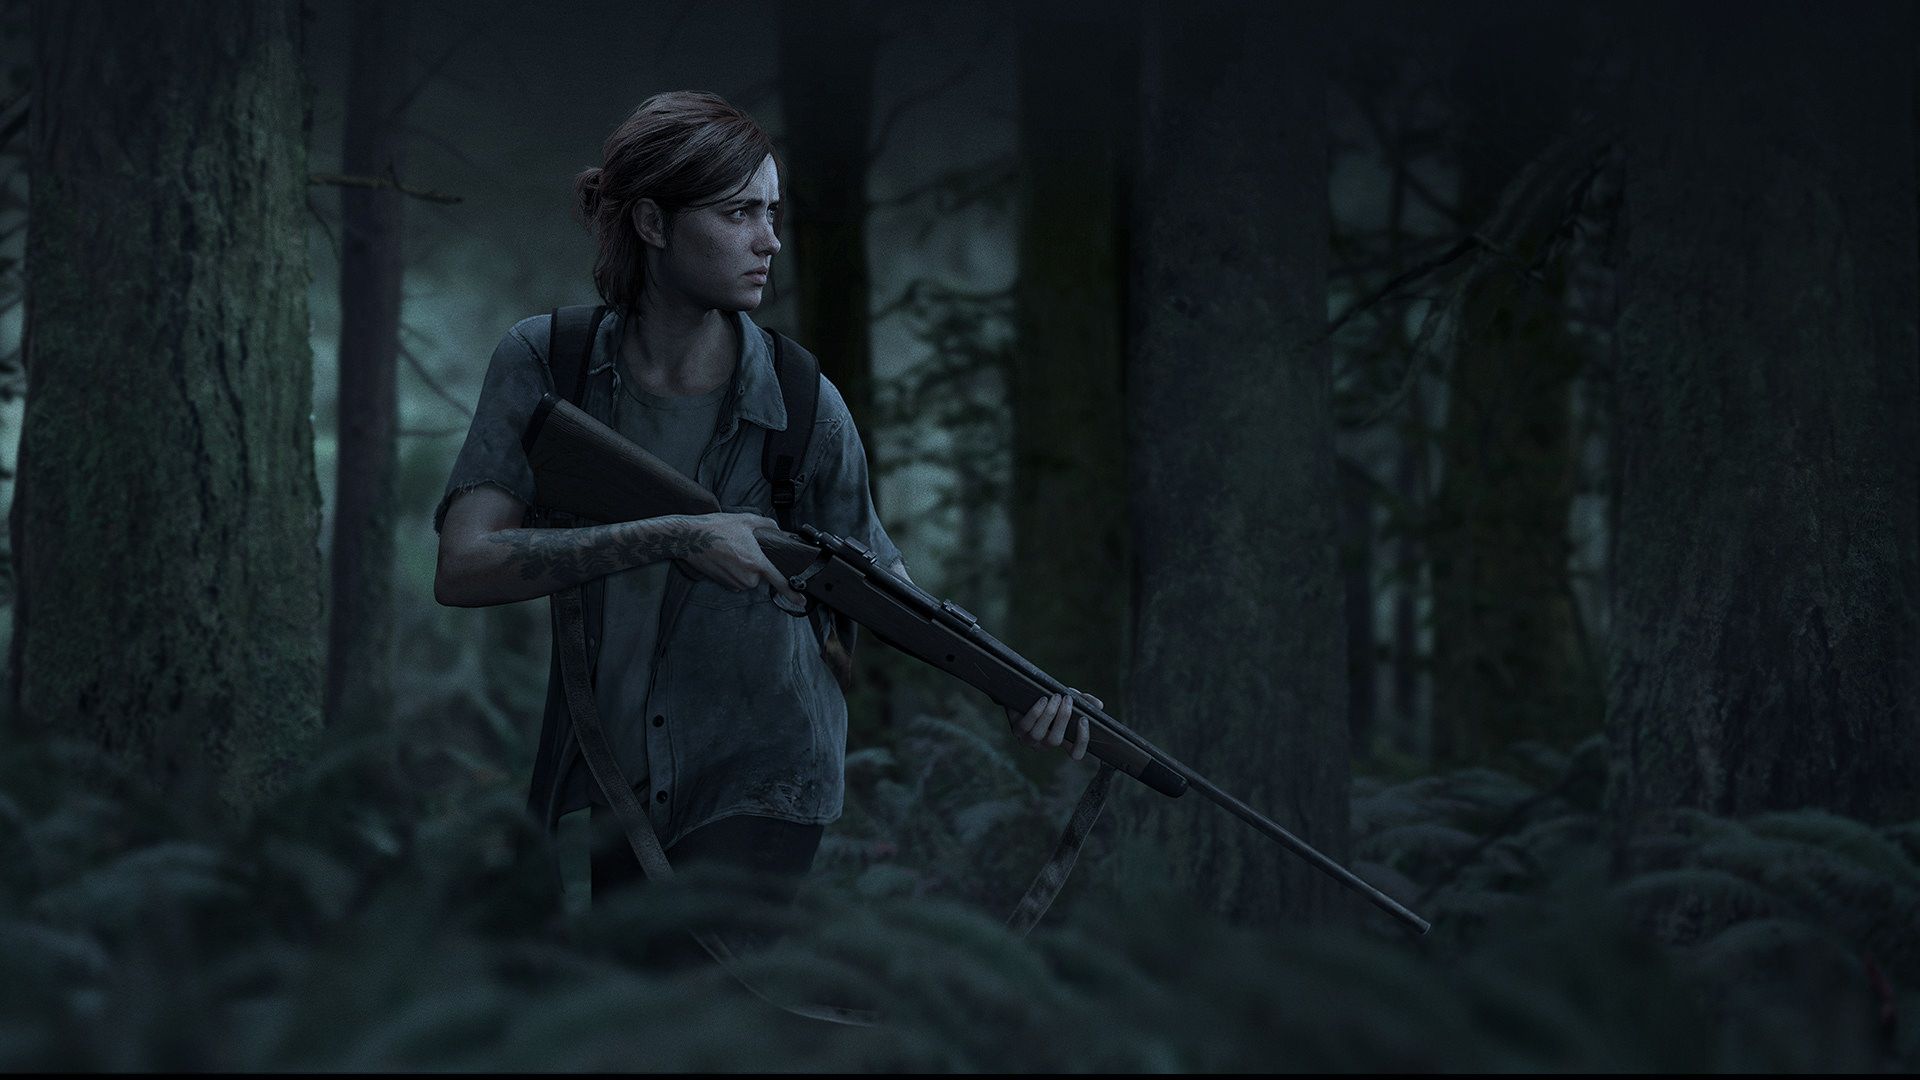 The Last of Us HD Wallpaper - WallpaperFX